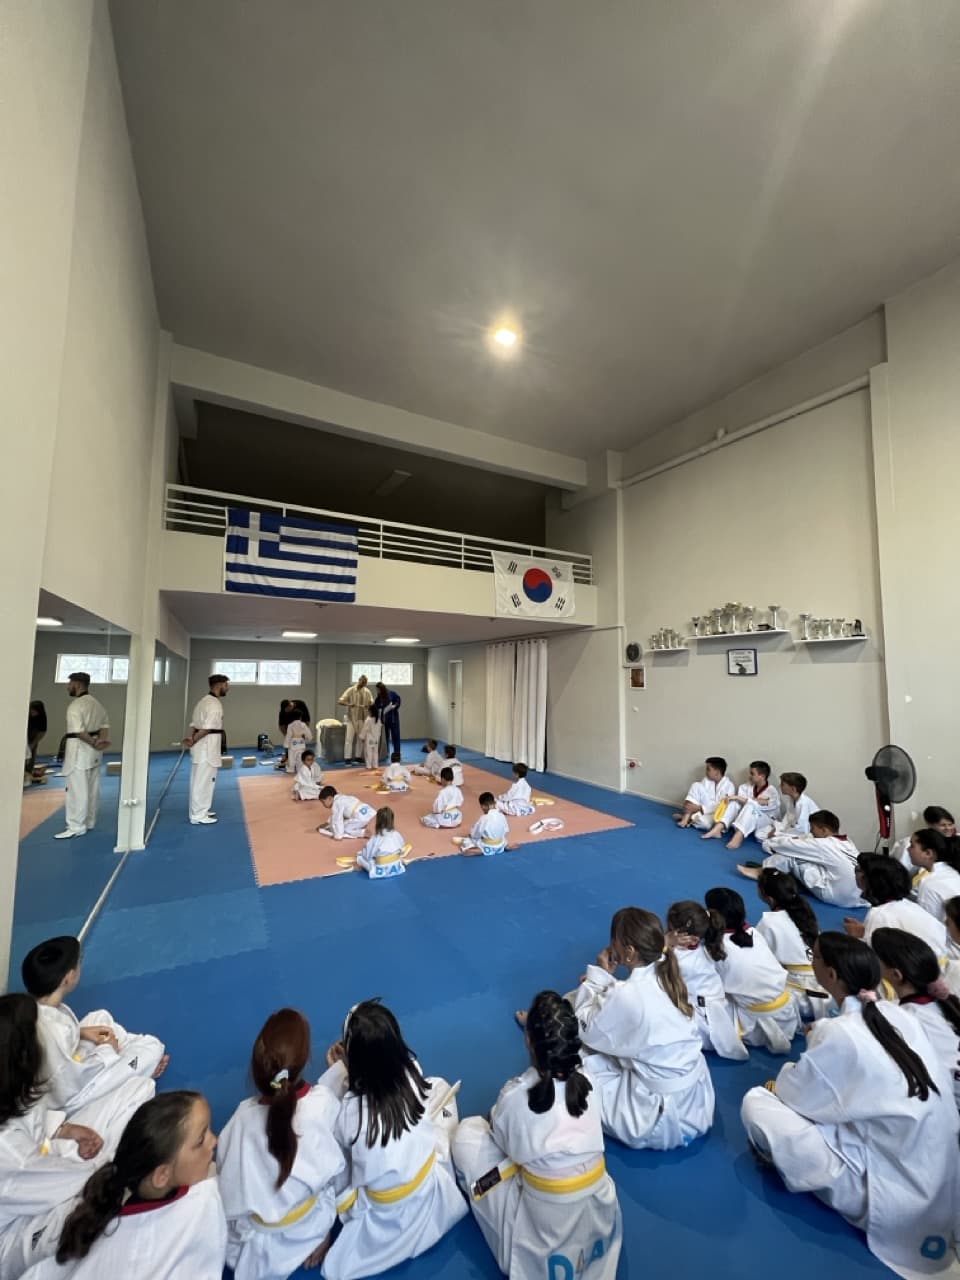 dias-kalamatas-taekwondo-sportshunter5